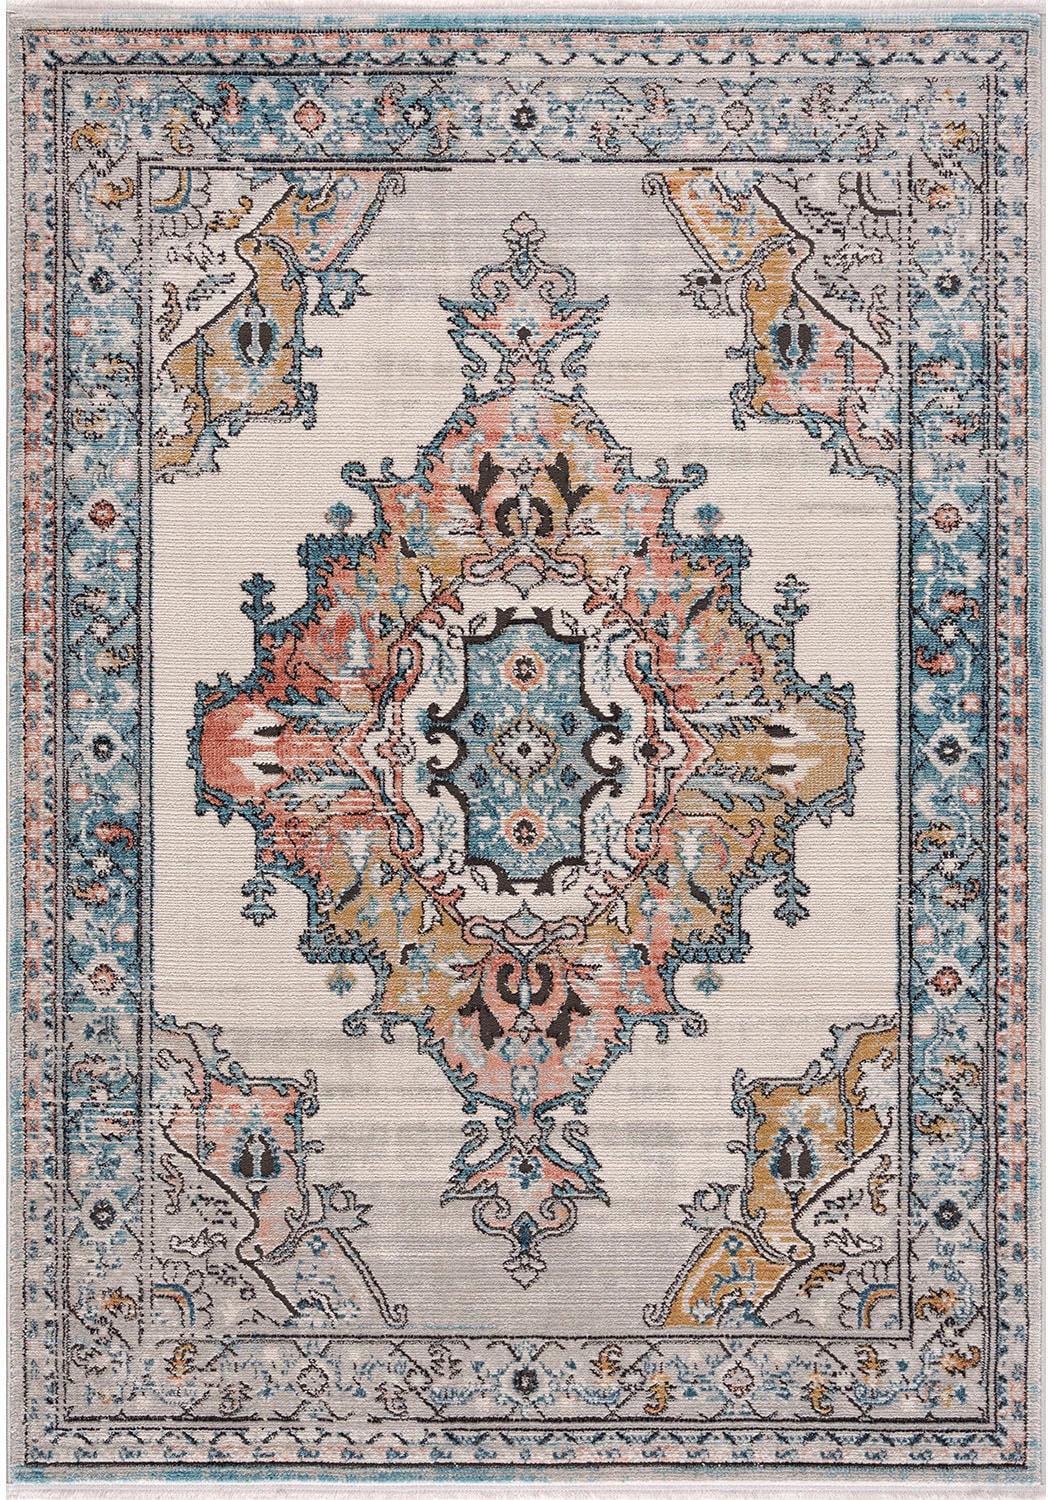 8640«, Teppich Carpet rechteckig, mit Used-Look, »Novel City Fransen, Multicolor Vintage-Teppich